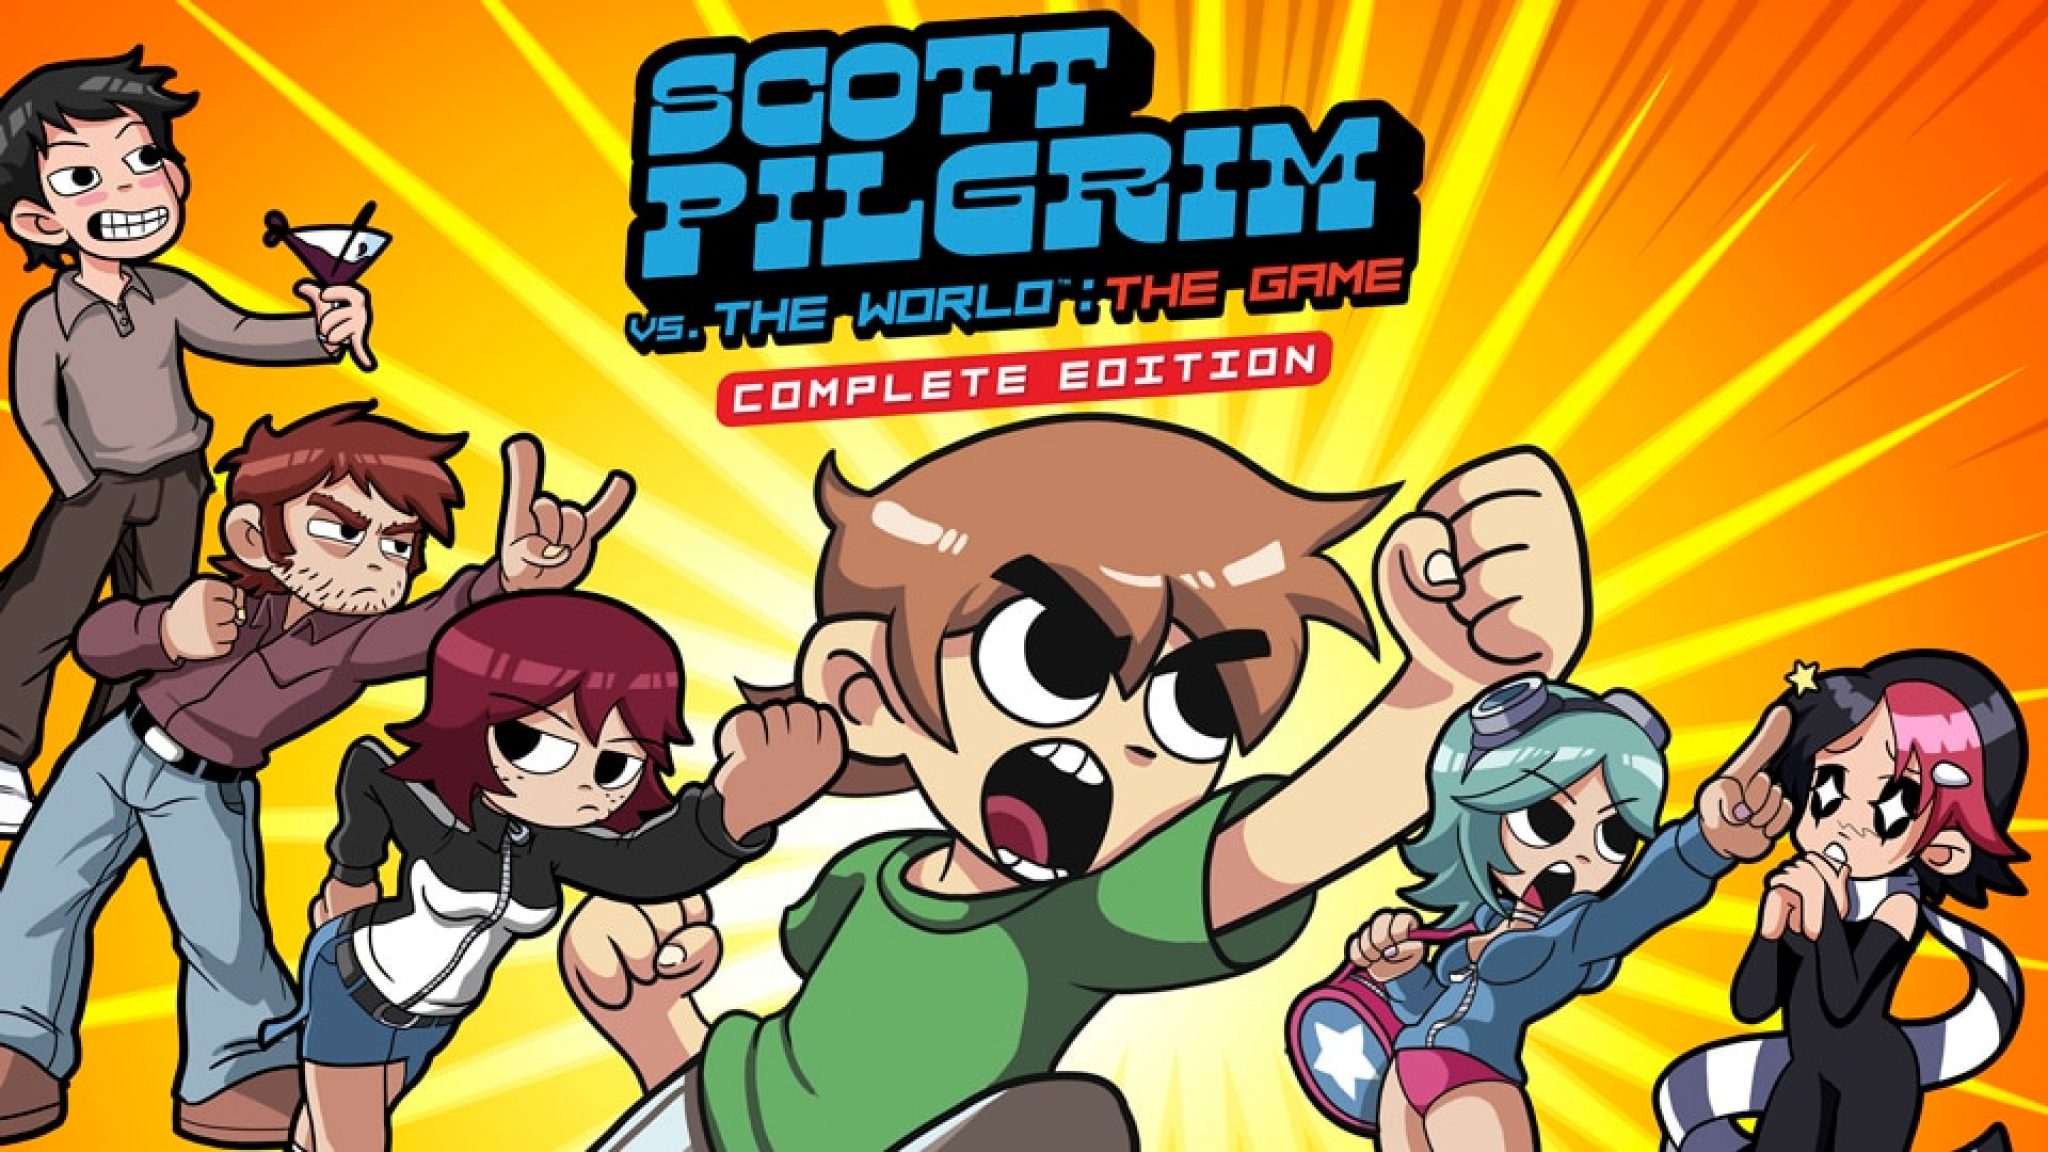 scott pilgrim vs the world game pc download free